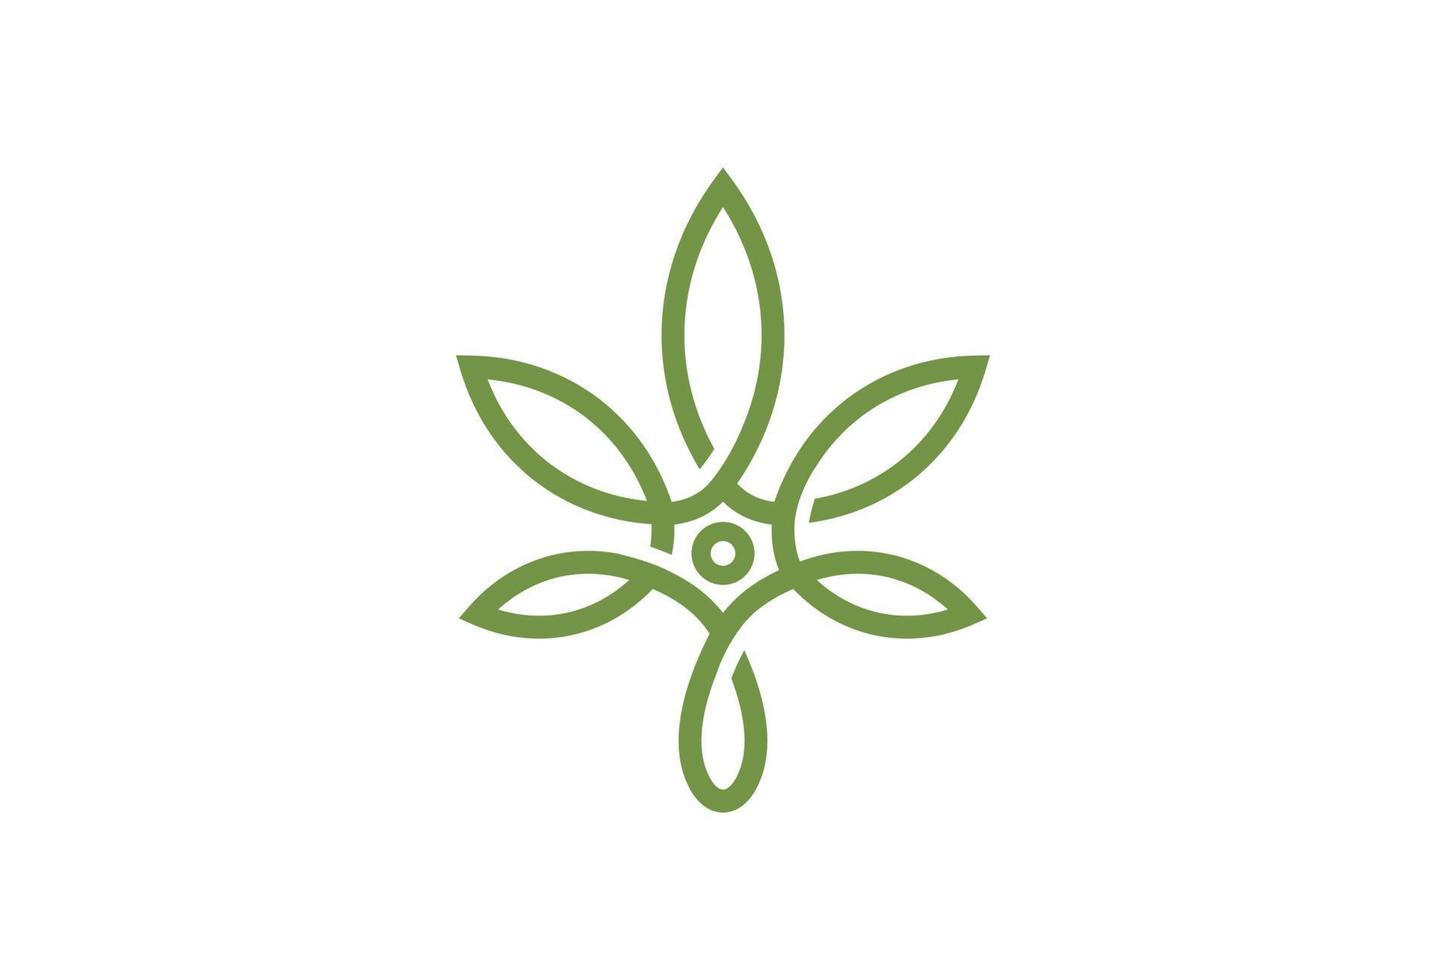 CBD Cannabis Marijuana Pot Hemp Leaf with Line Art style Logo design vector